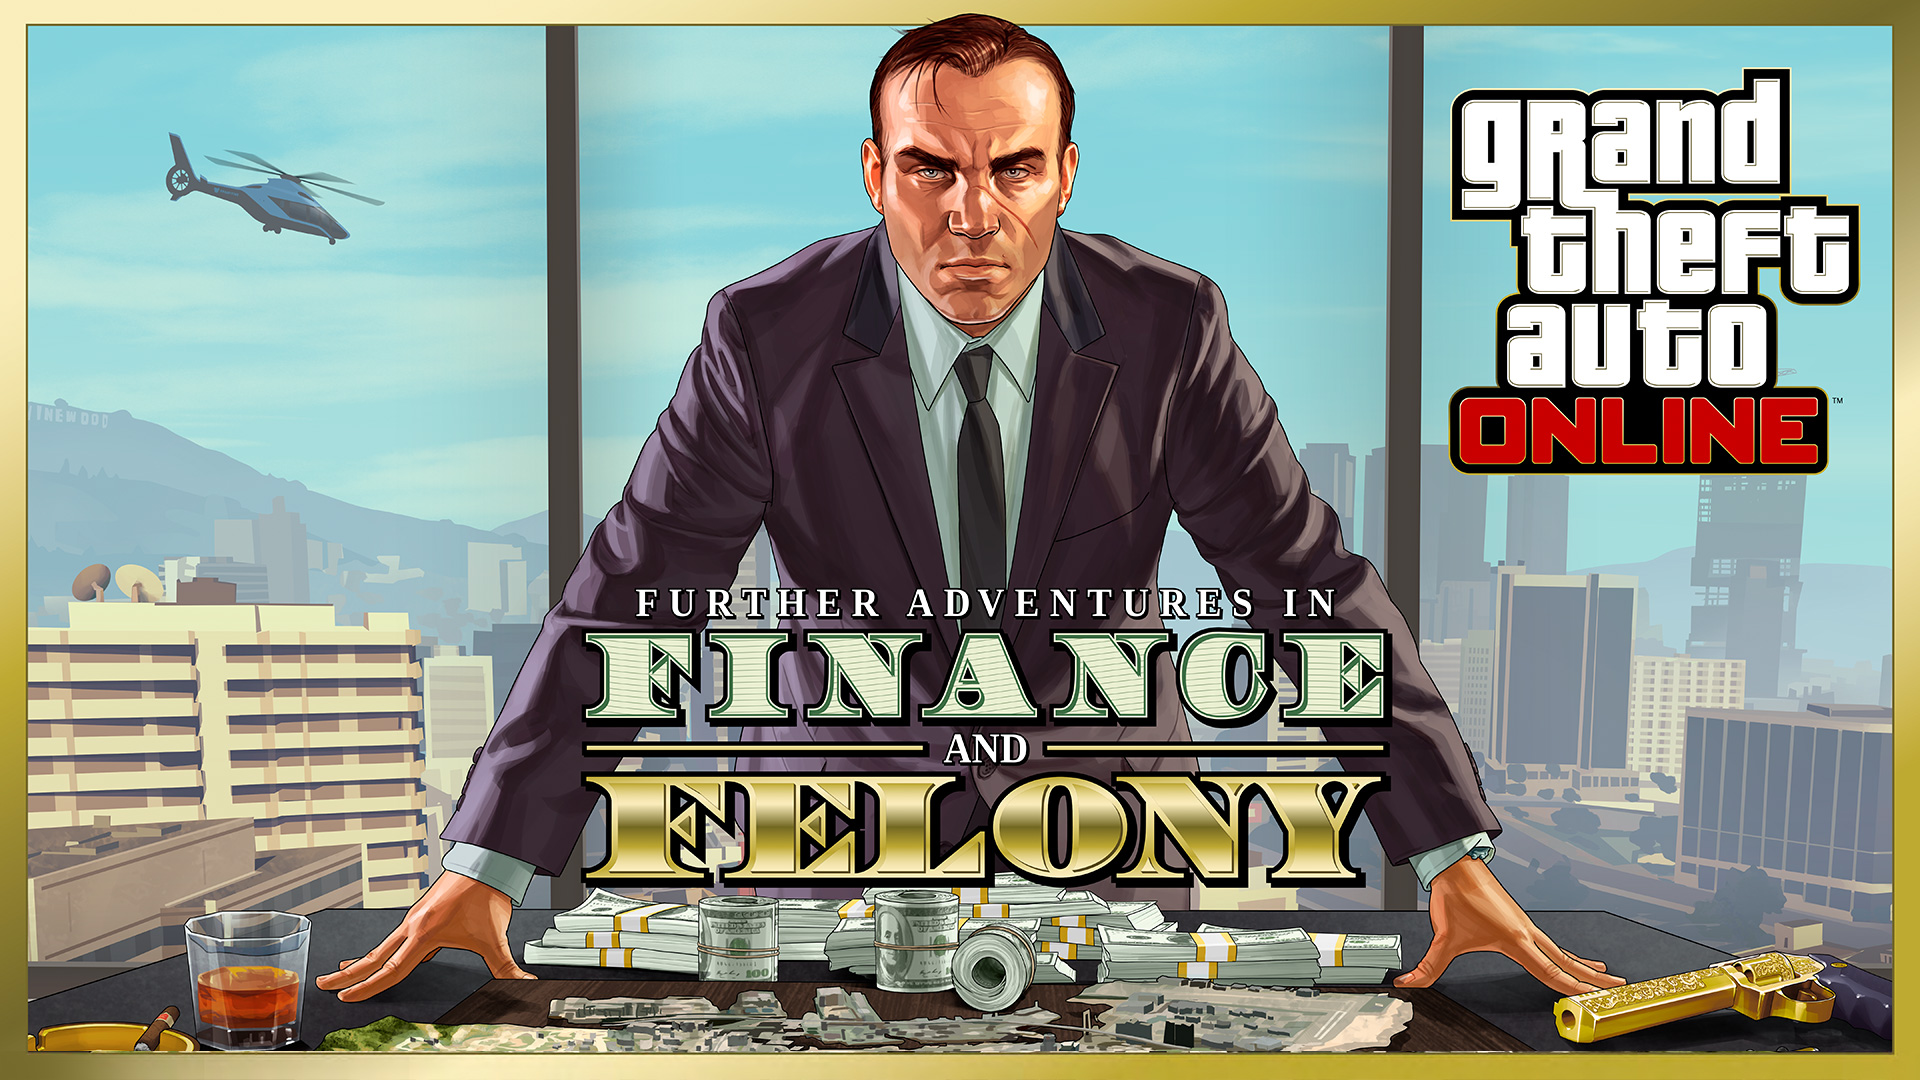 Gtao Further Adventures in Finance and Felony update.jpg